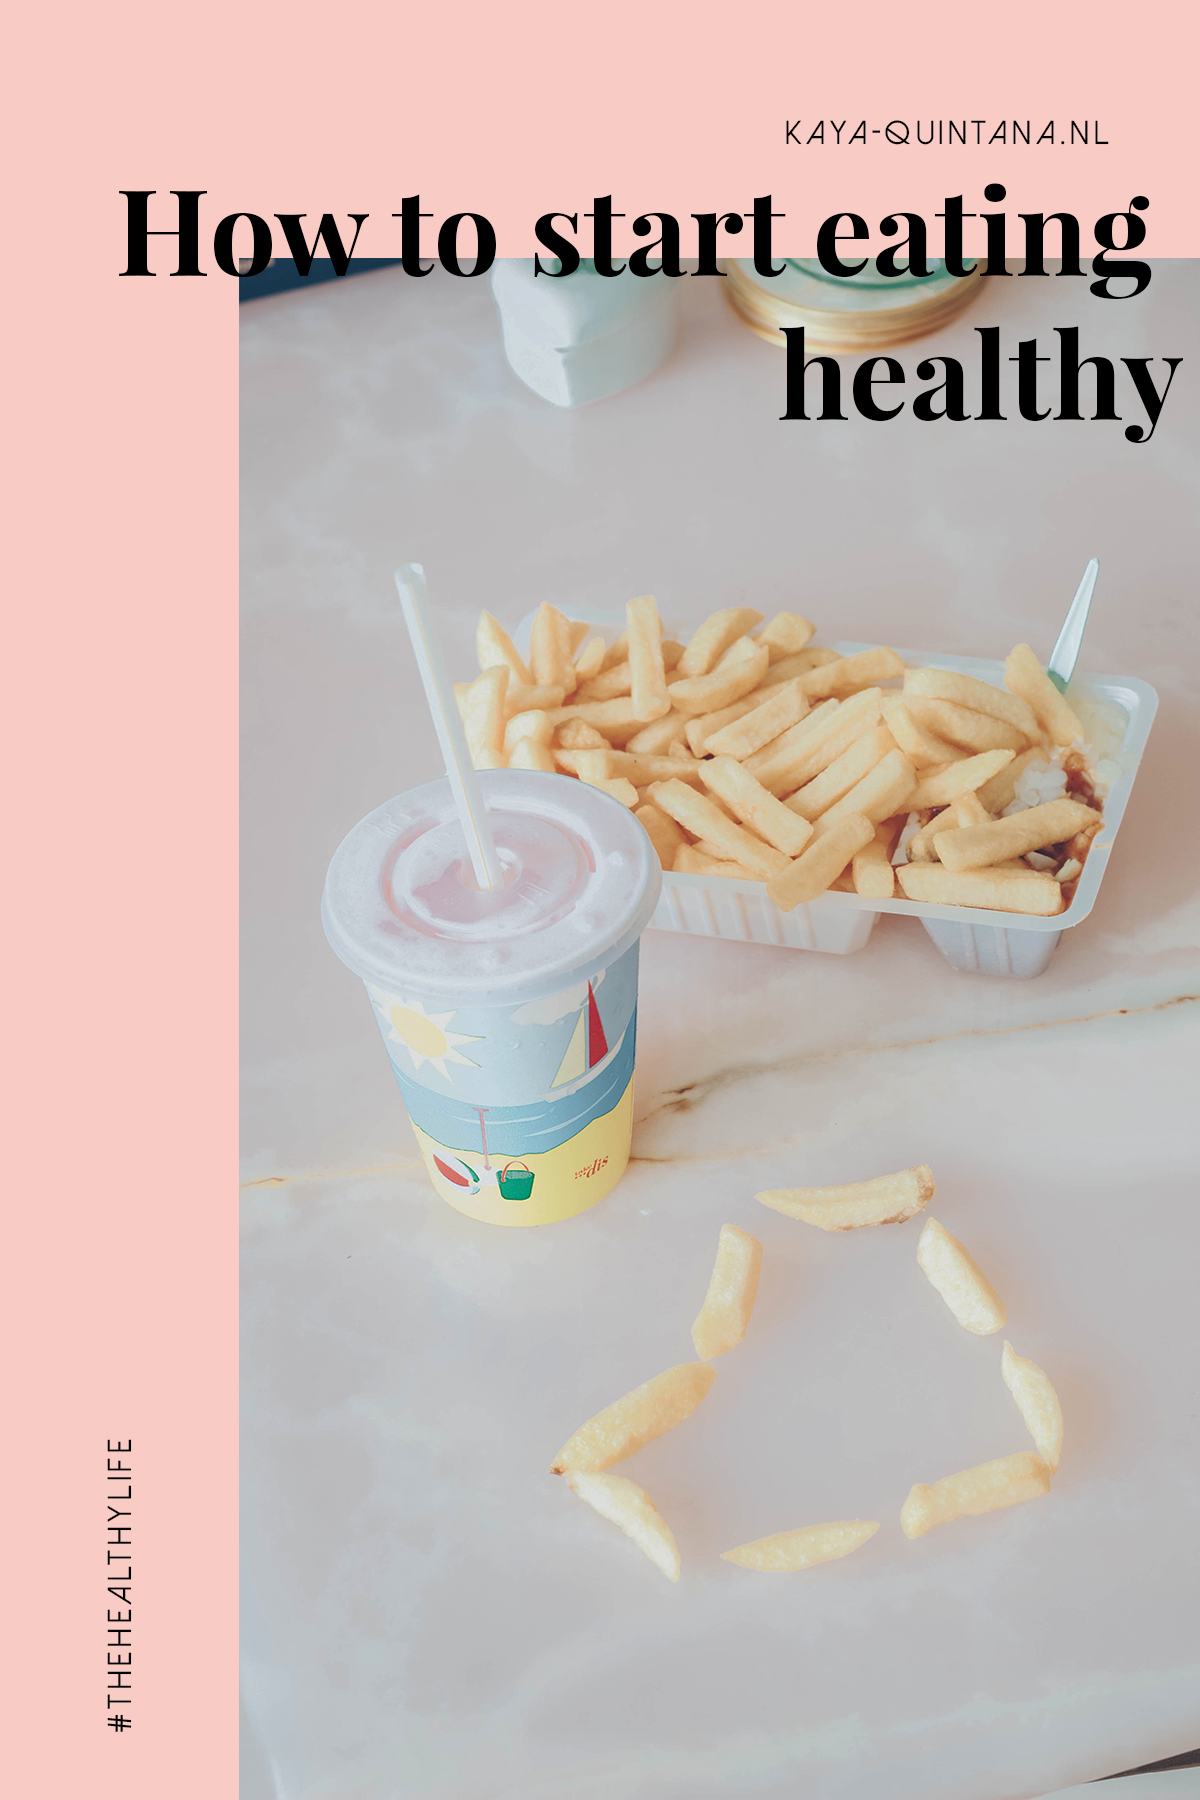  start eating healthy